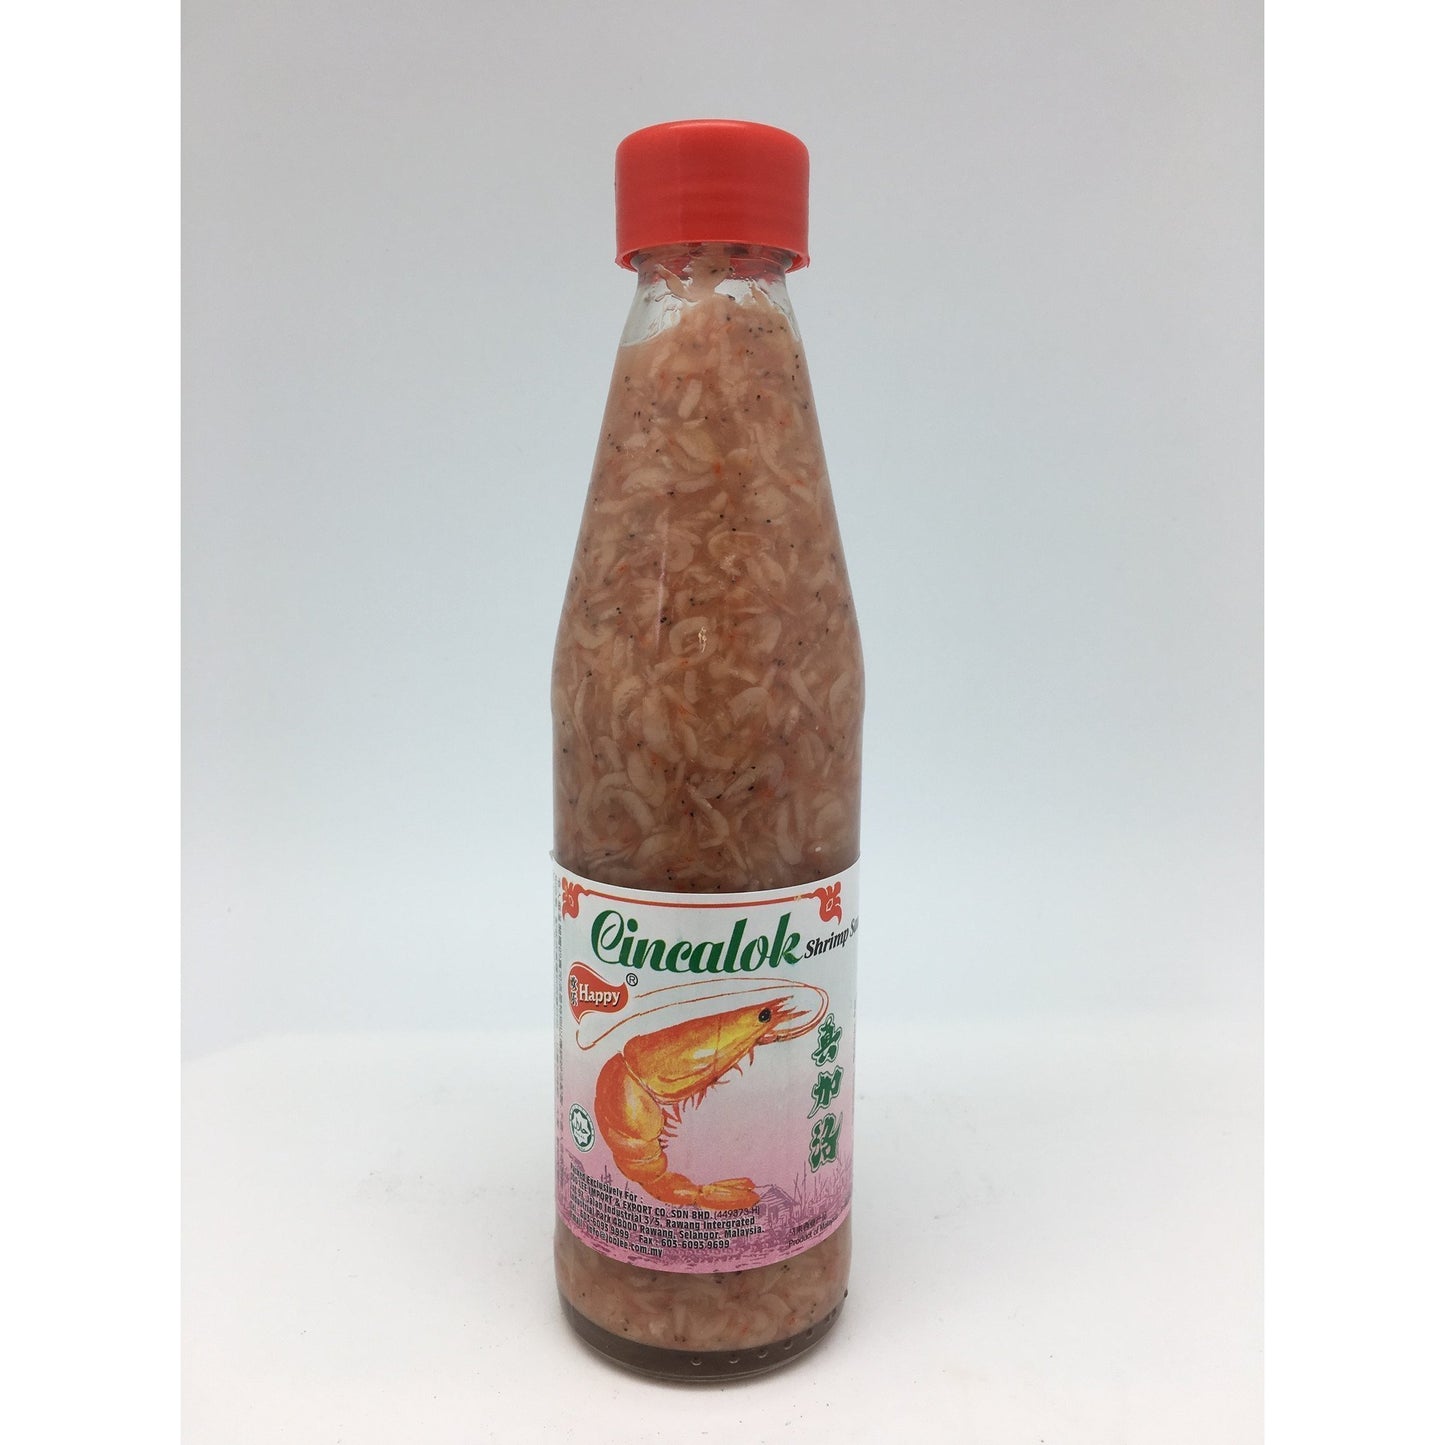 S035 Cincalok Brand - Shrimp Paste 340g -  24 bot / 1CTN - New Eastland Pty Ltd - Asian food wholesalers